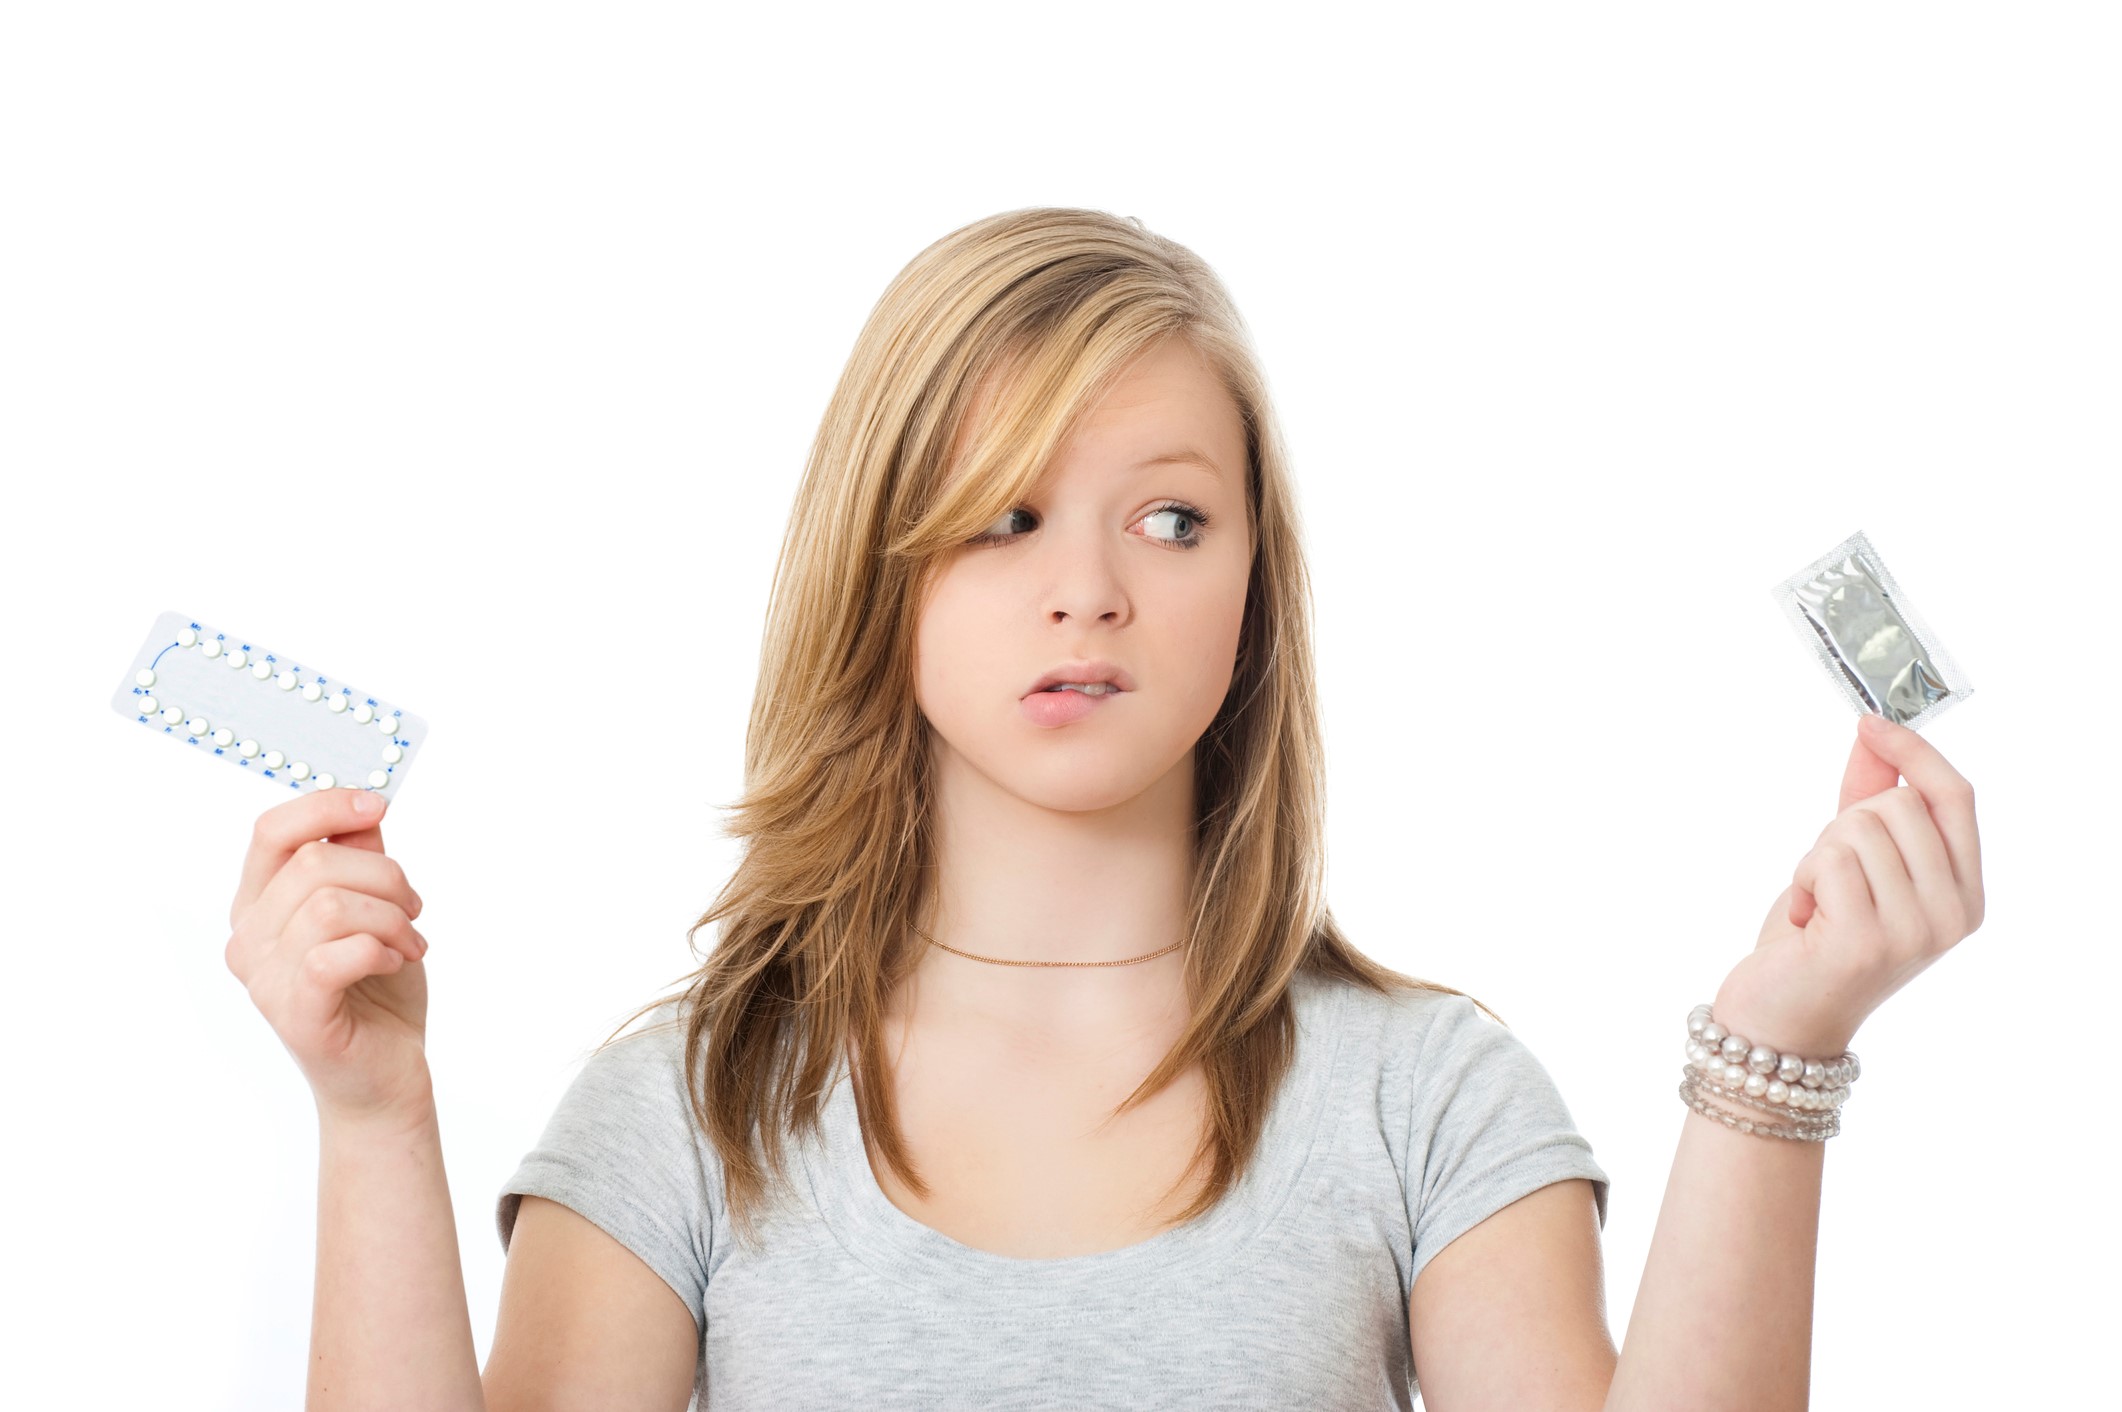 Young woman choosing between birth control methods.